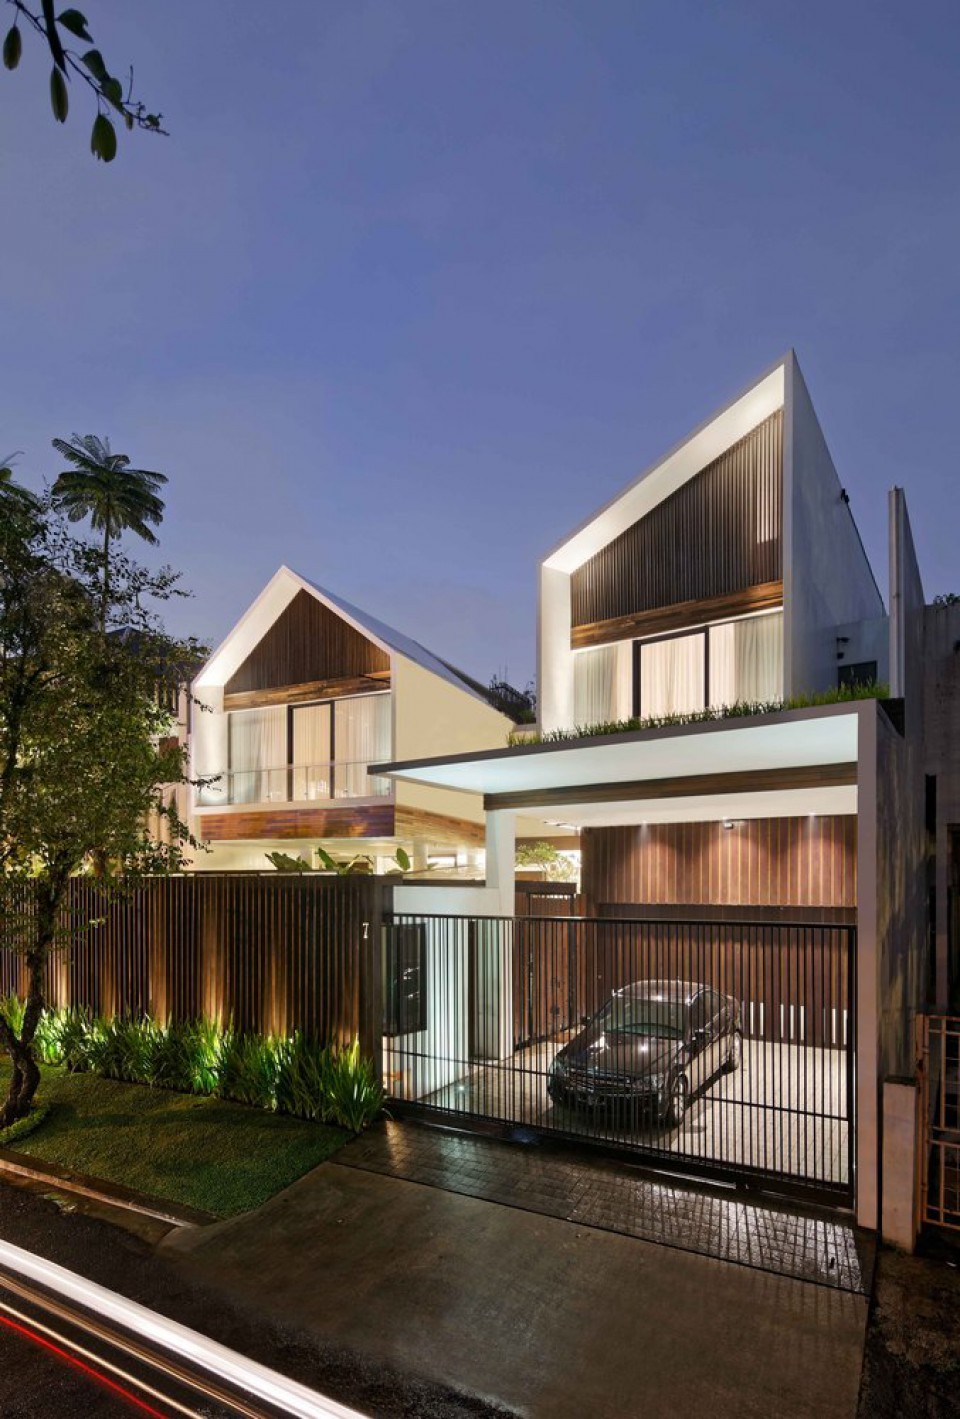 Rumah Minimalis Modern Di Bandung - Rumah Minimalis